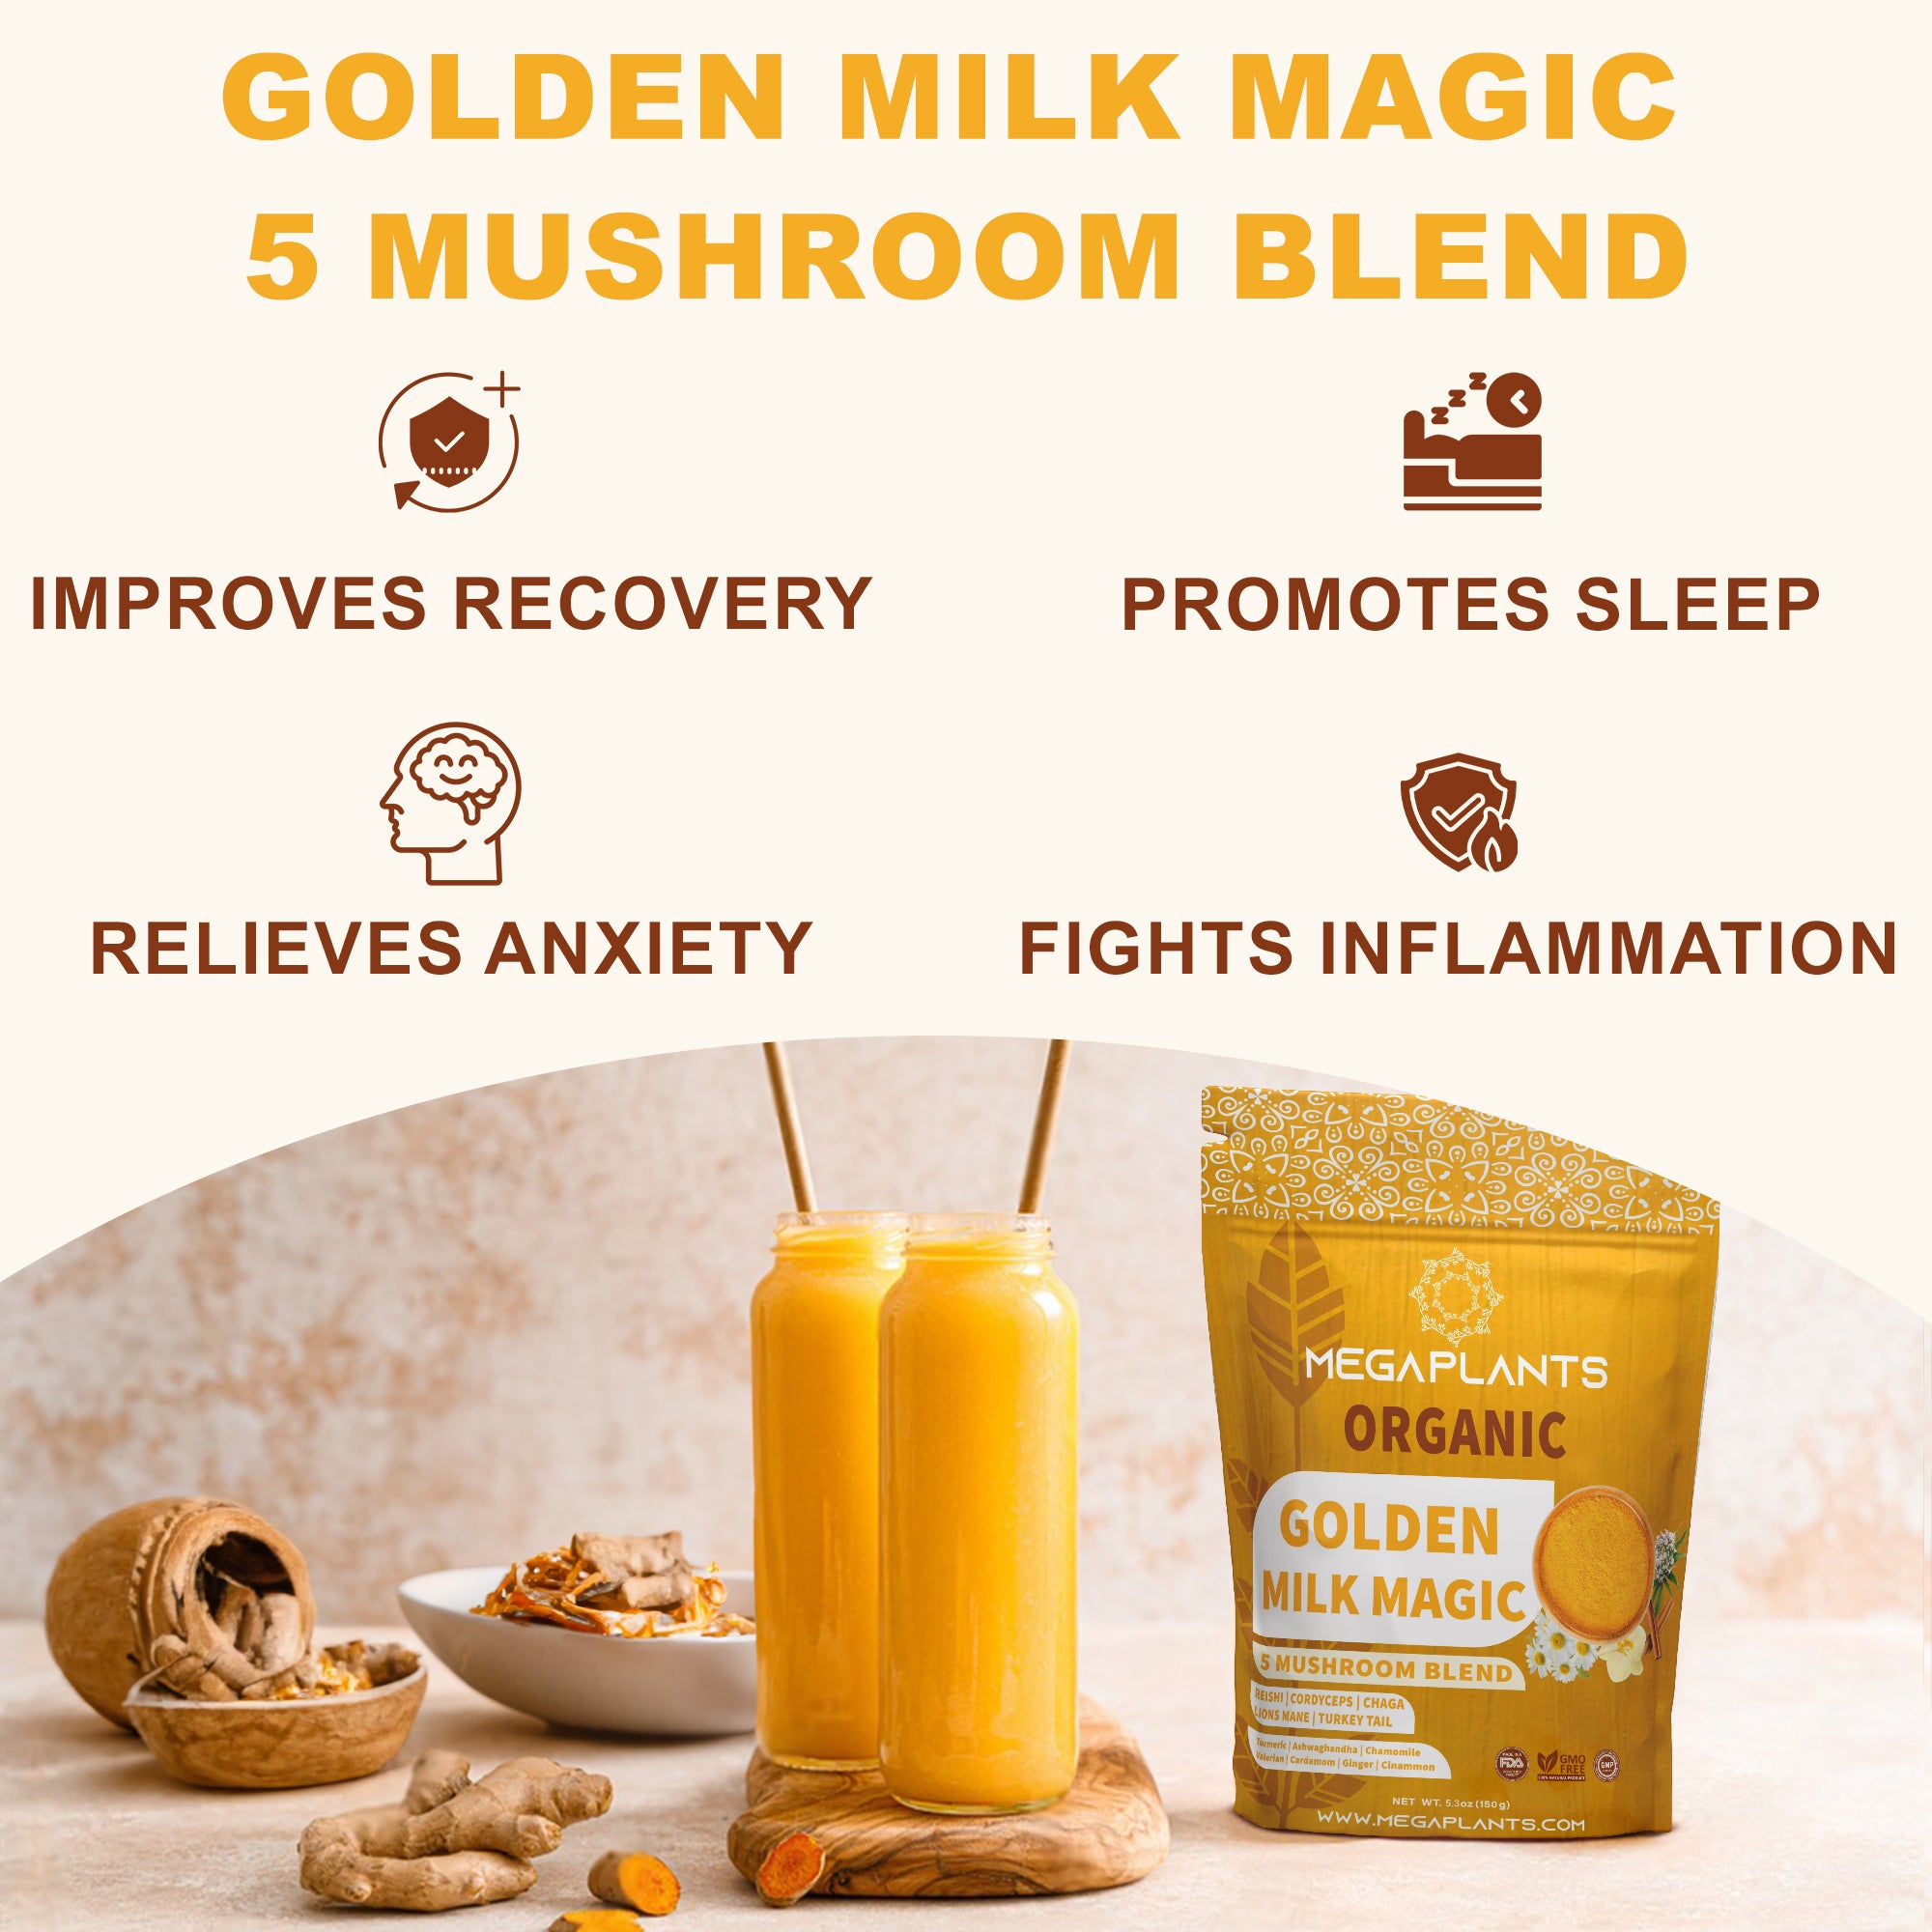 MegaPlants Golden Milk Magic